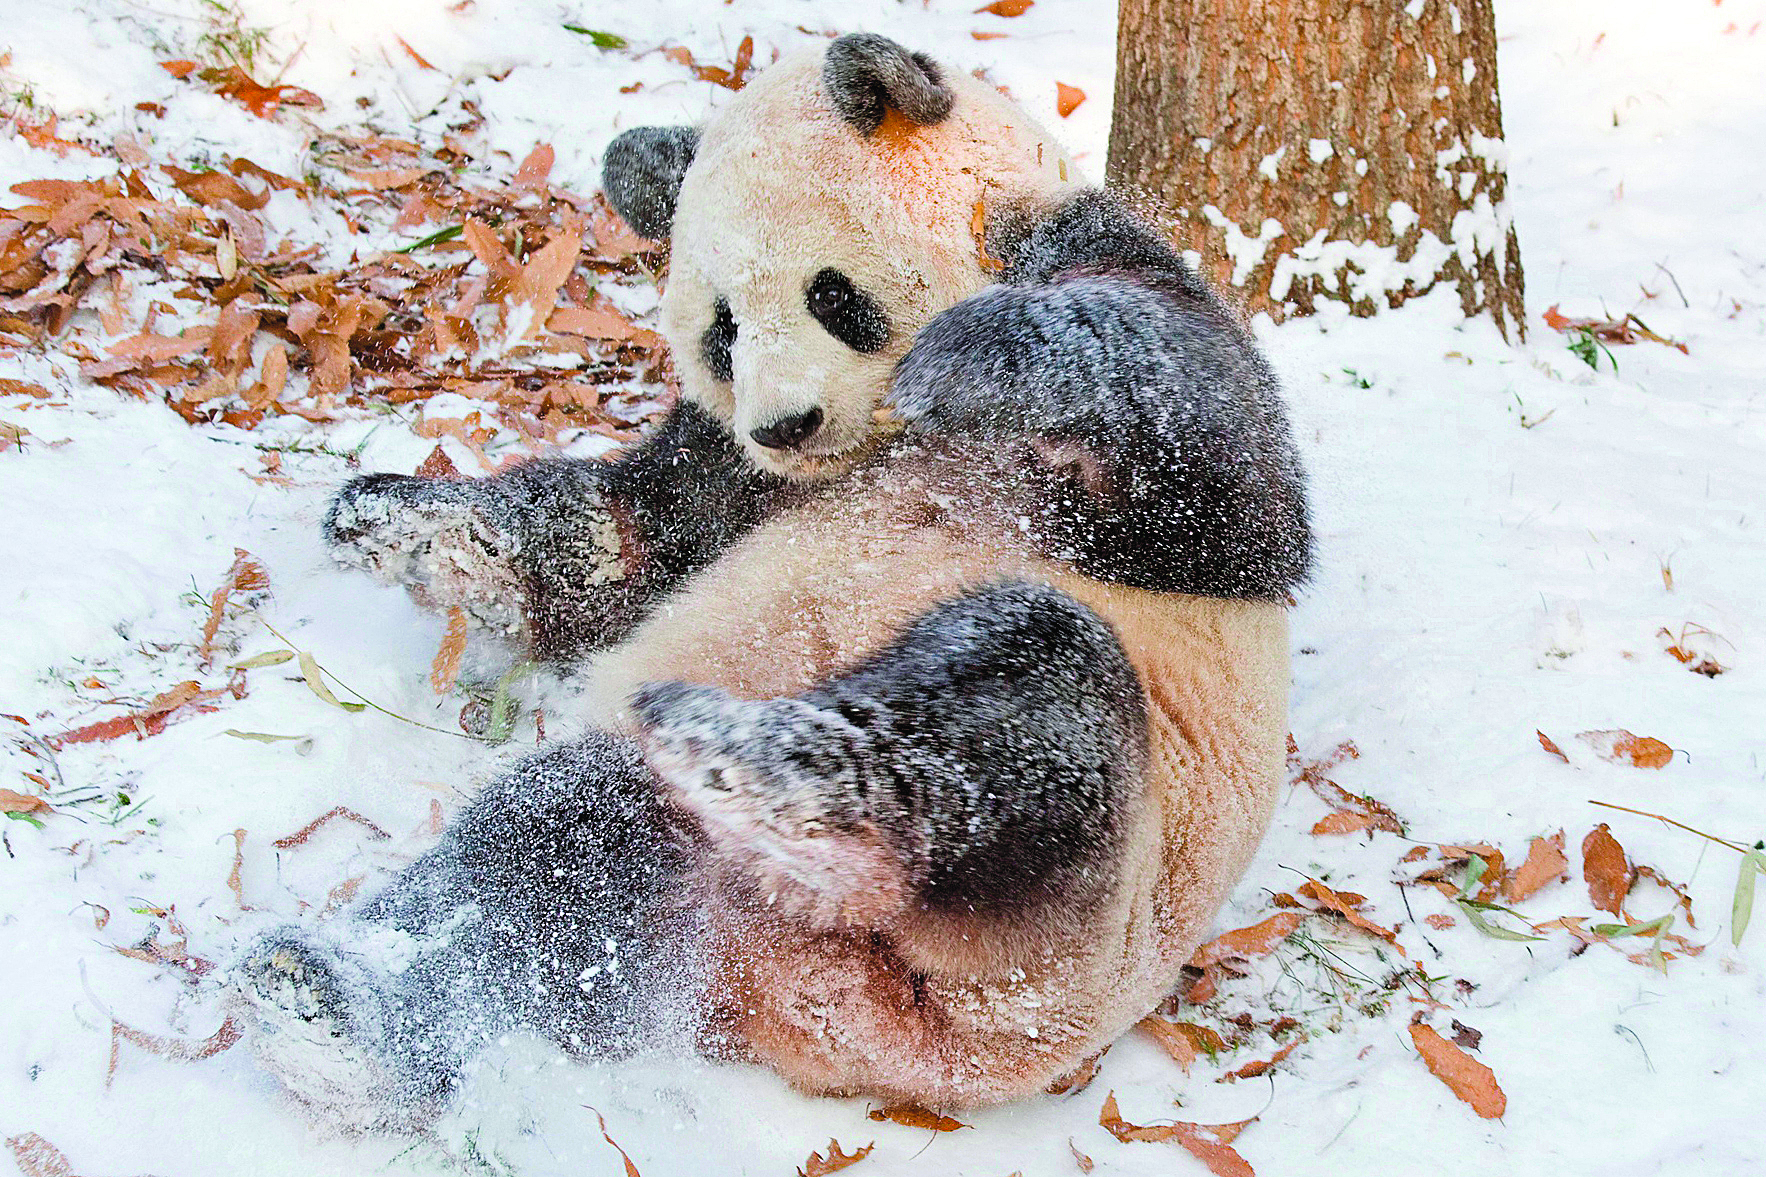 Vídeo de panda a brincar na neve tornou-se viral [vídeo]